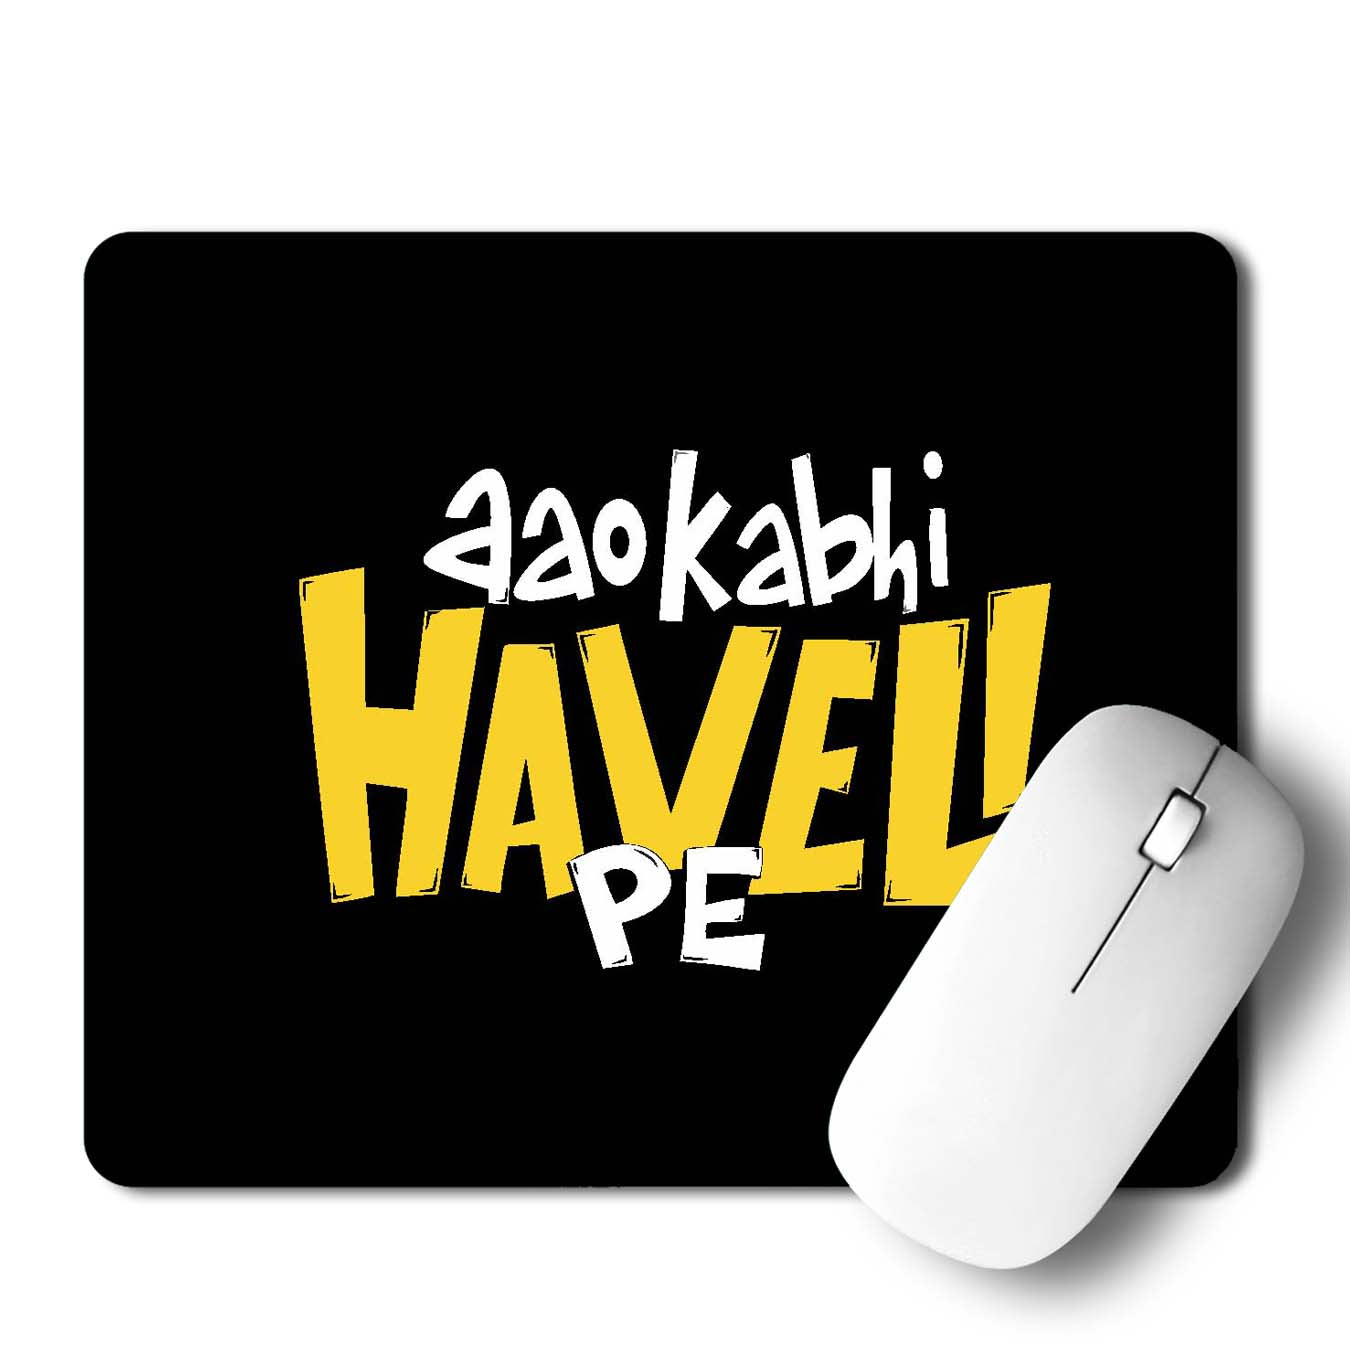 Aao Kabhi Haveli Pe Mouse Pad